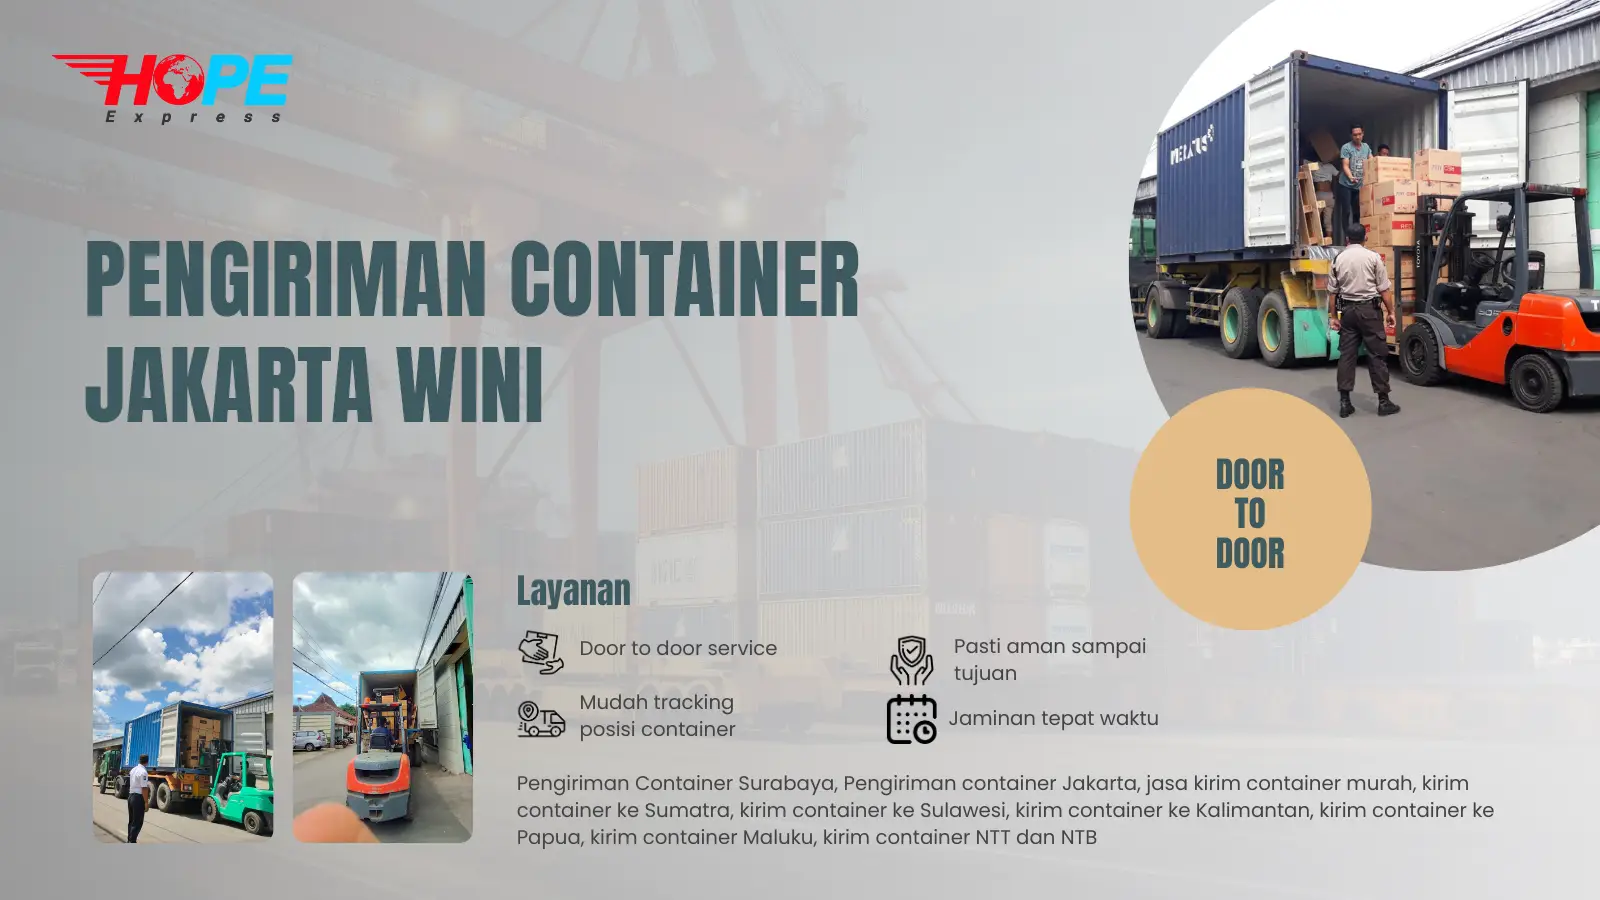 Pengiriman Container Jakarta Wini